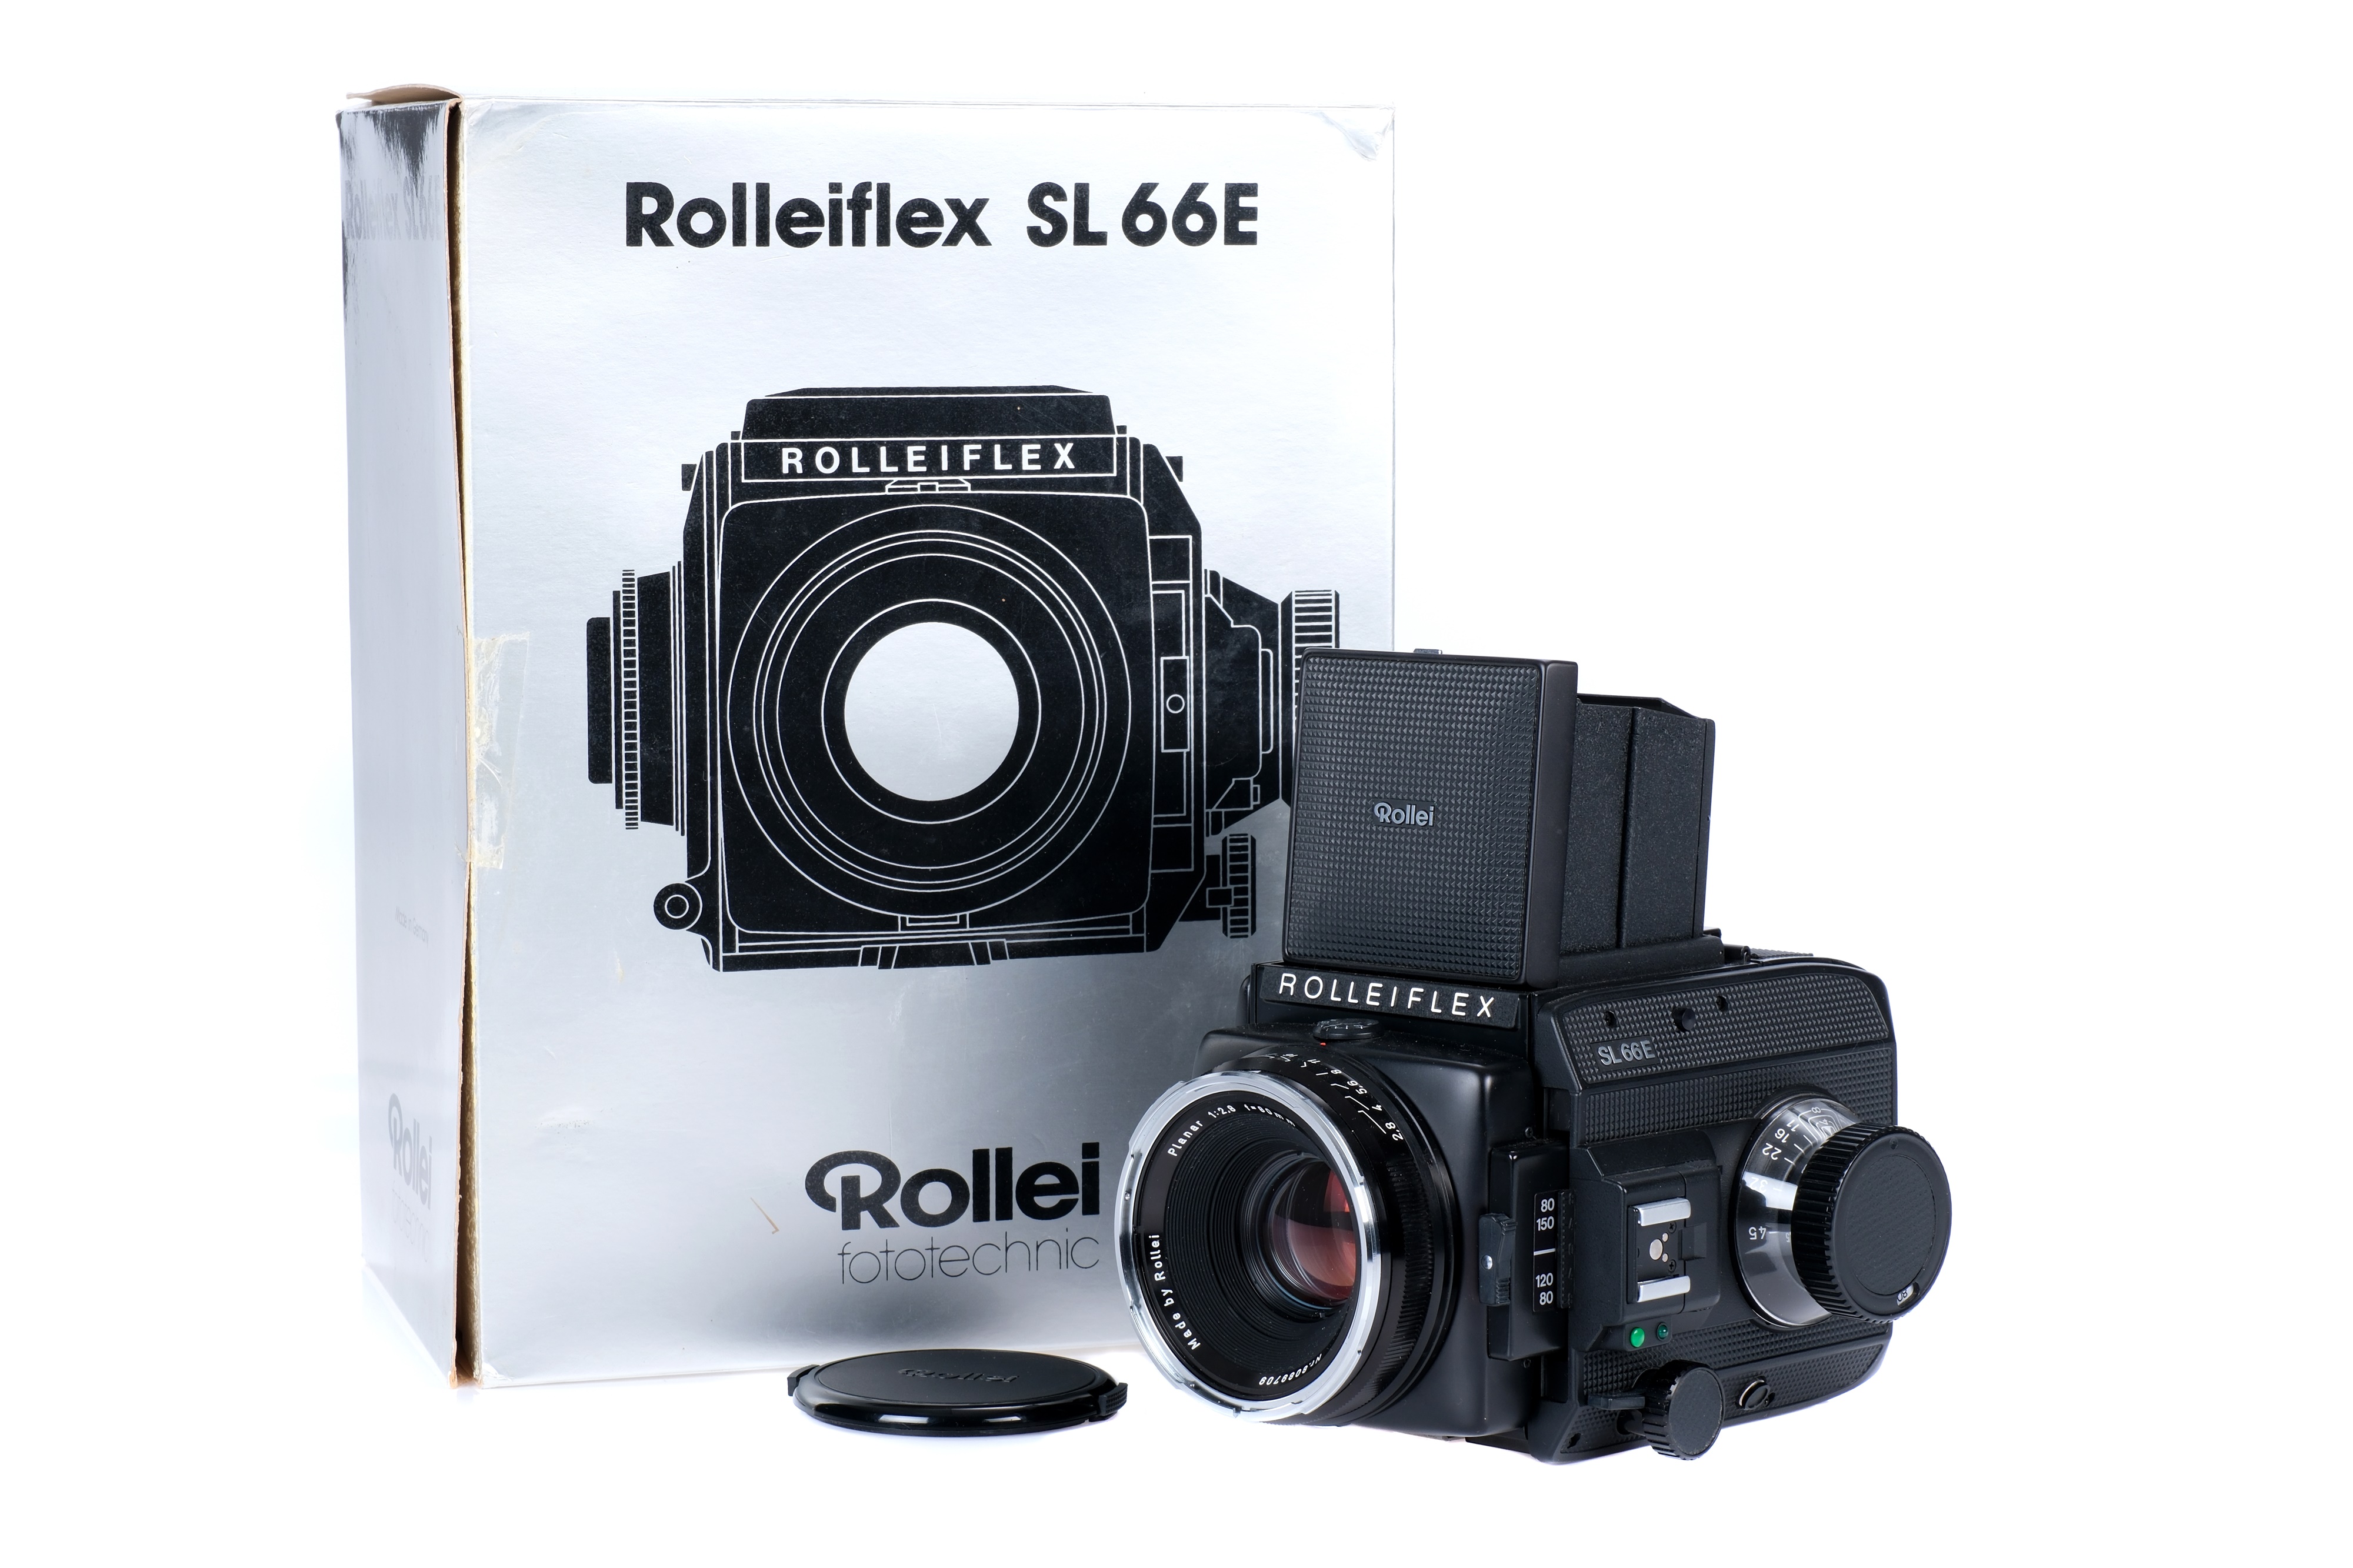 A Rollei Rolleiflex SL66E Medium Format Camera,